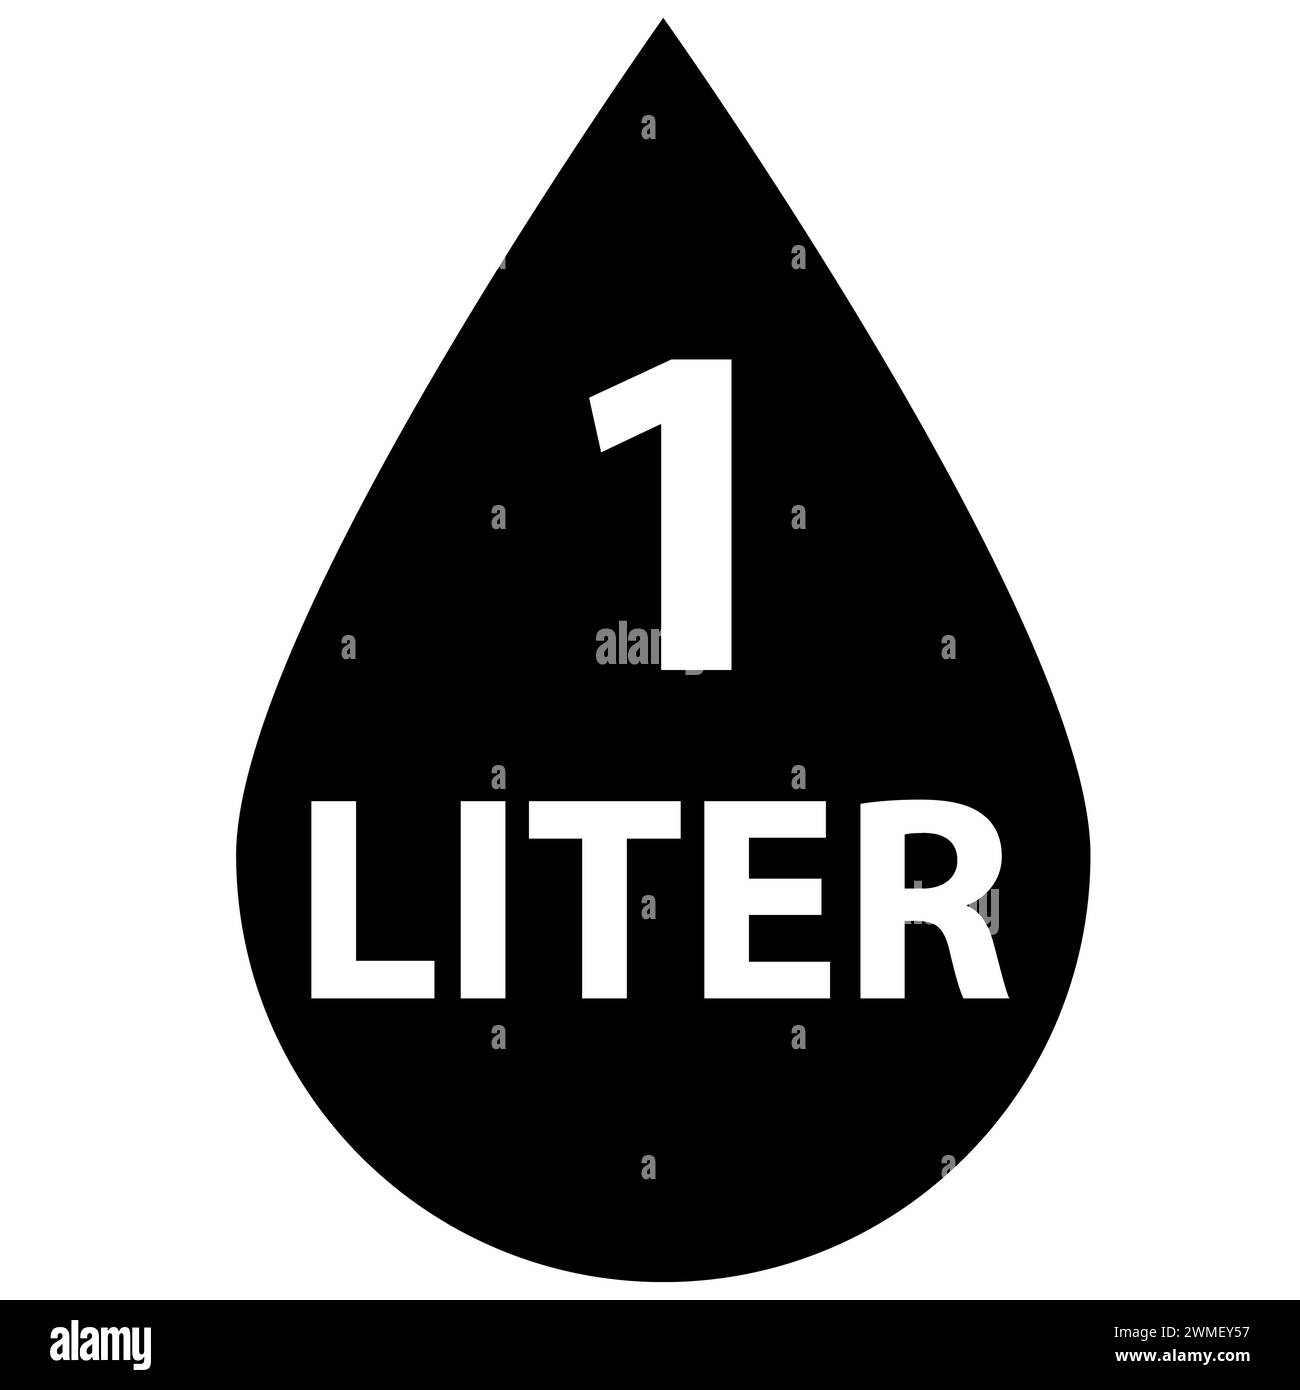 1 liter icon. Fluid volume in liters sign. Liquid drop symbol. flat style. Stock Photo